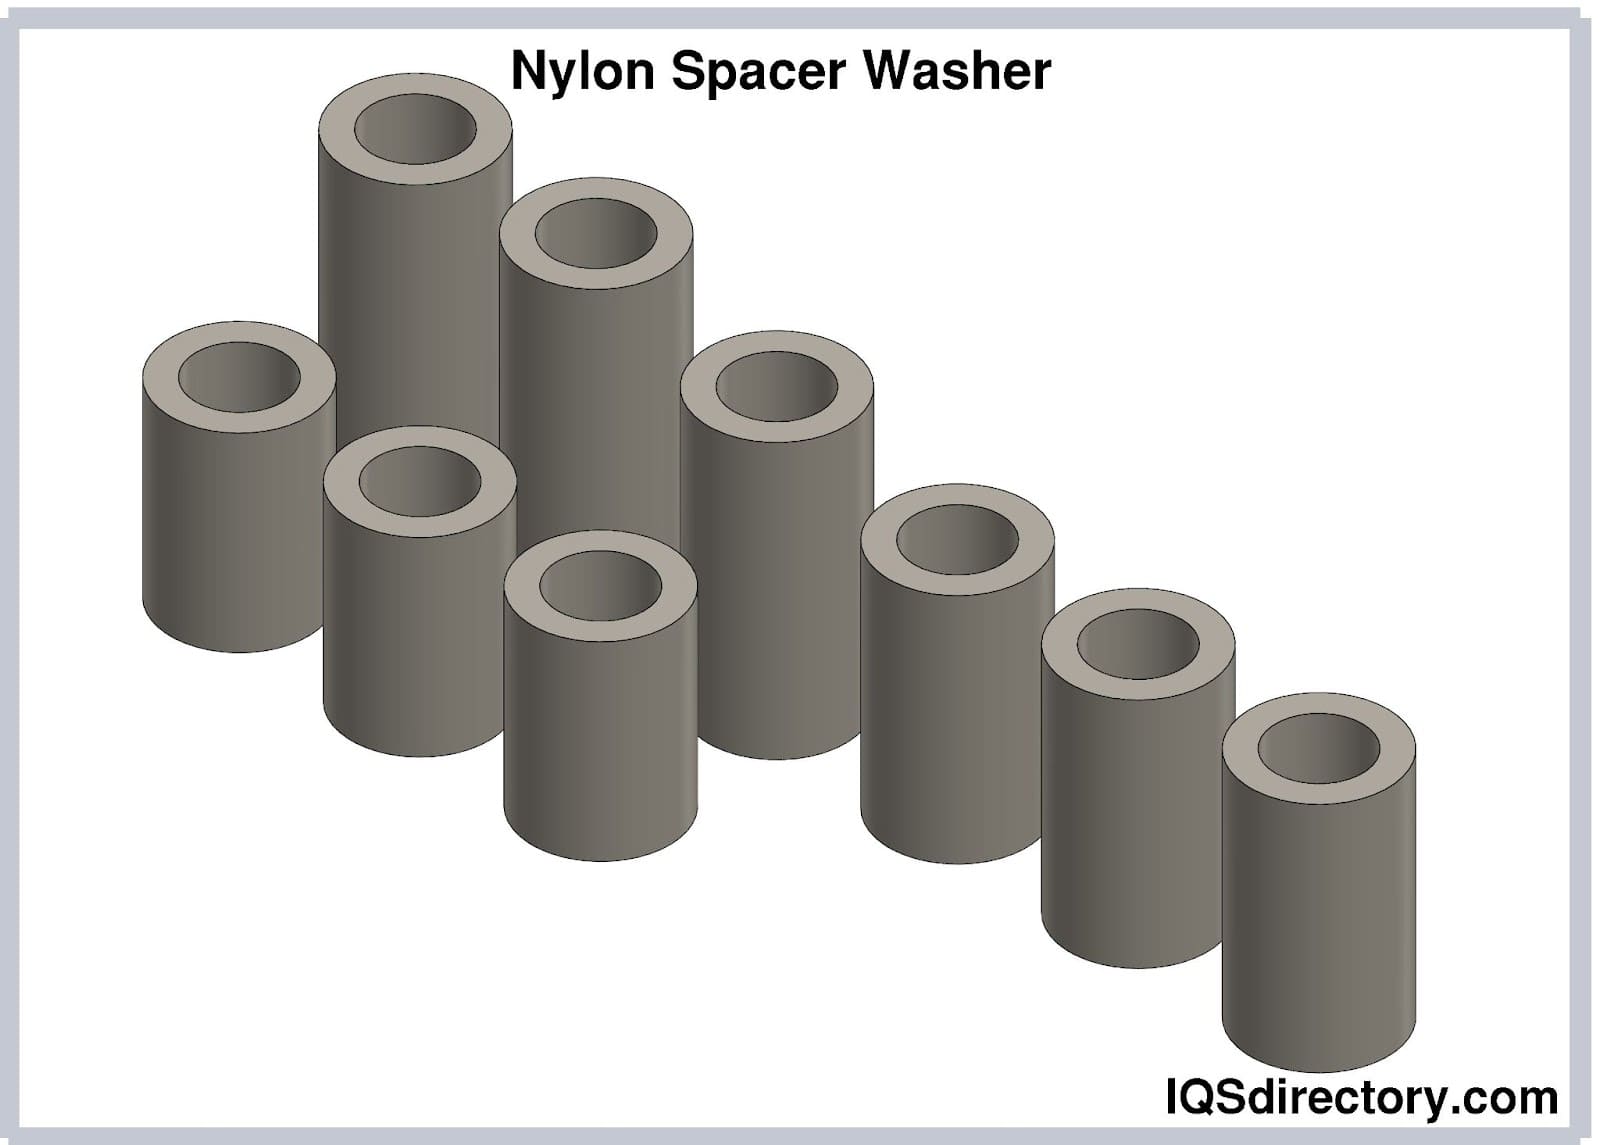 Nylon Spacer Washer